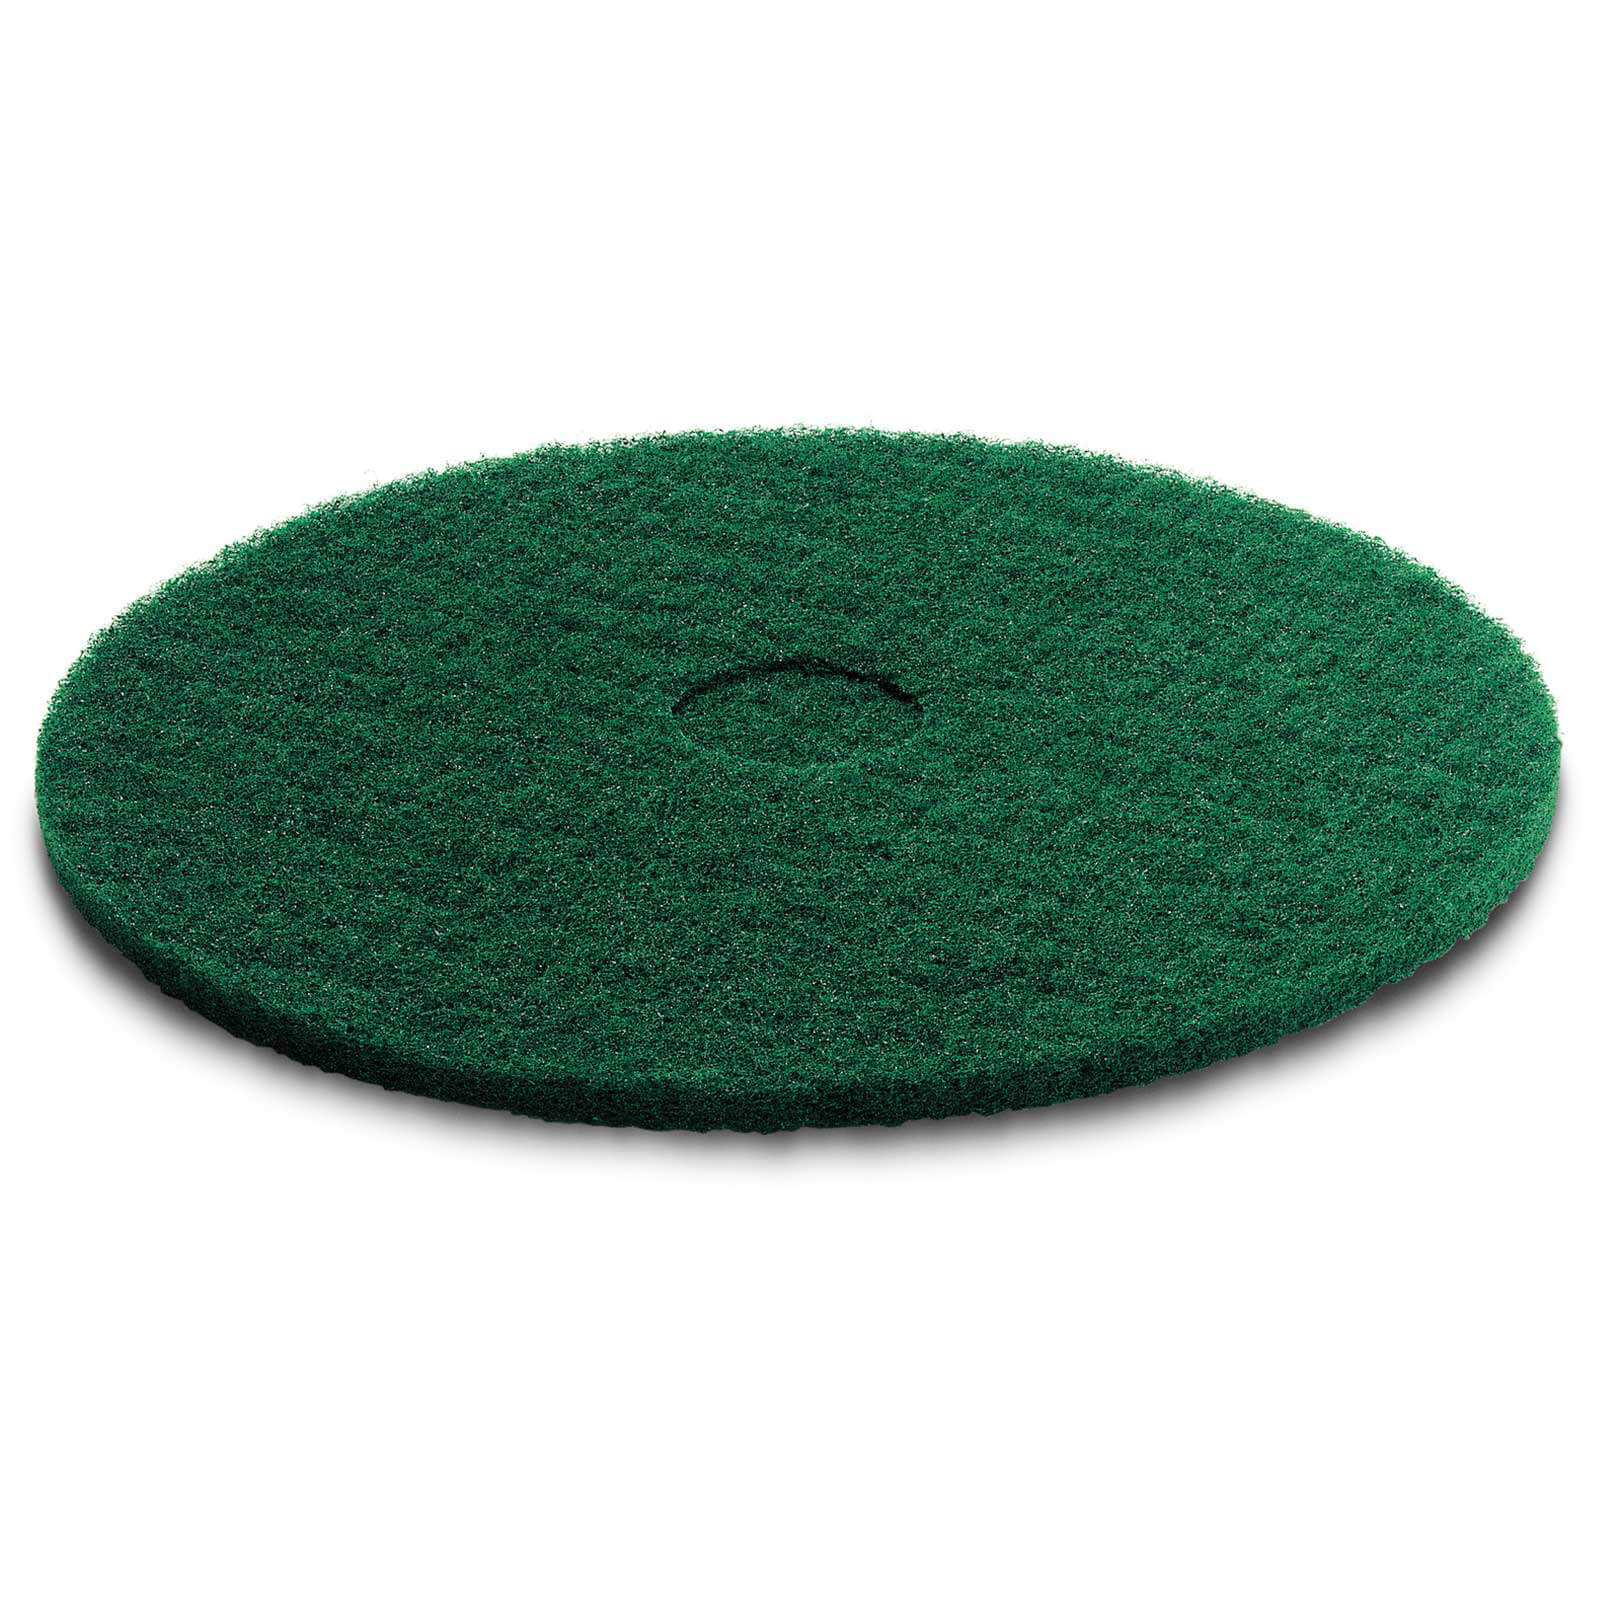 Image of Karcher Floor Scrubber Pad Medium Hard Green 330 mm Pack of 5